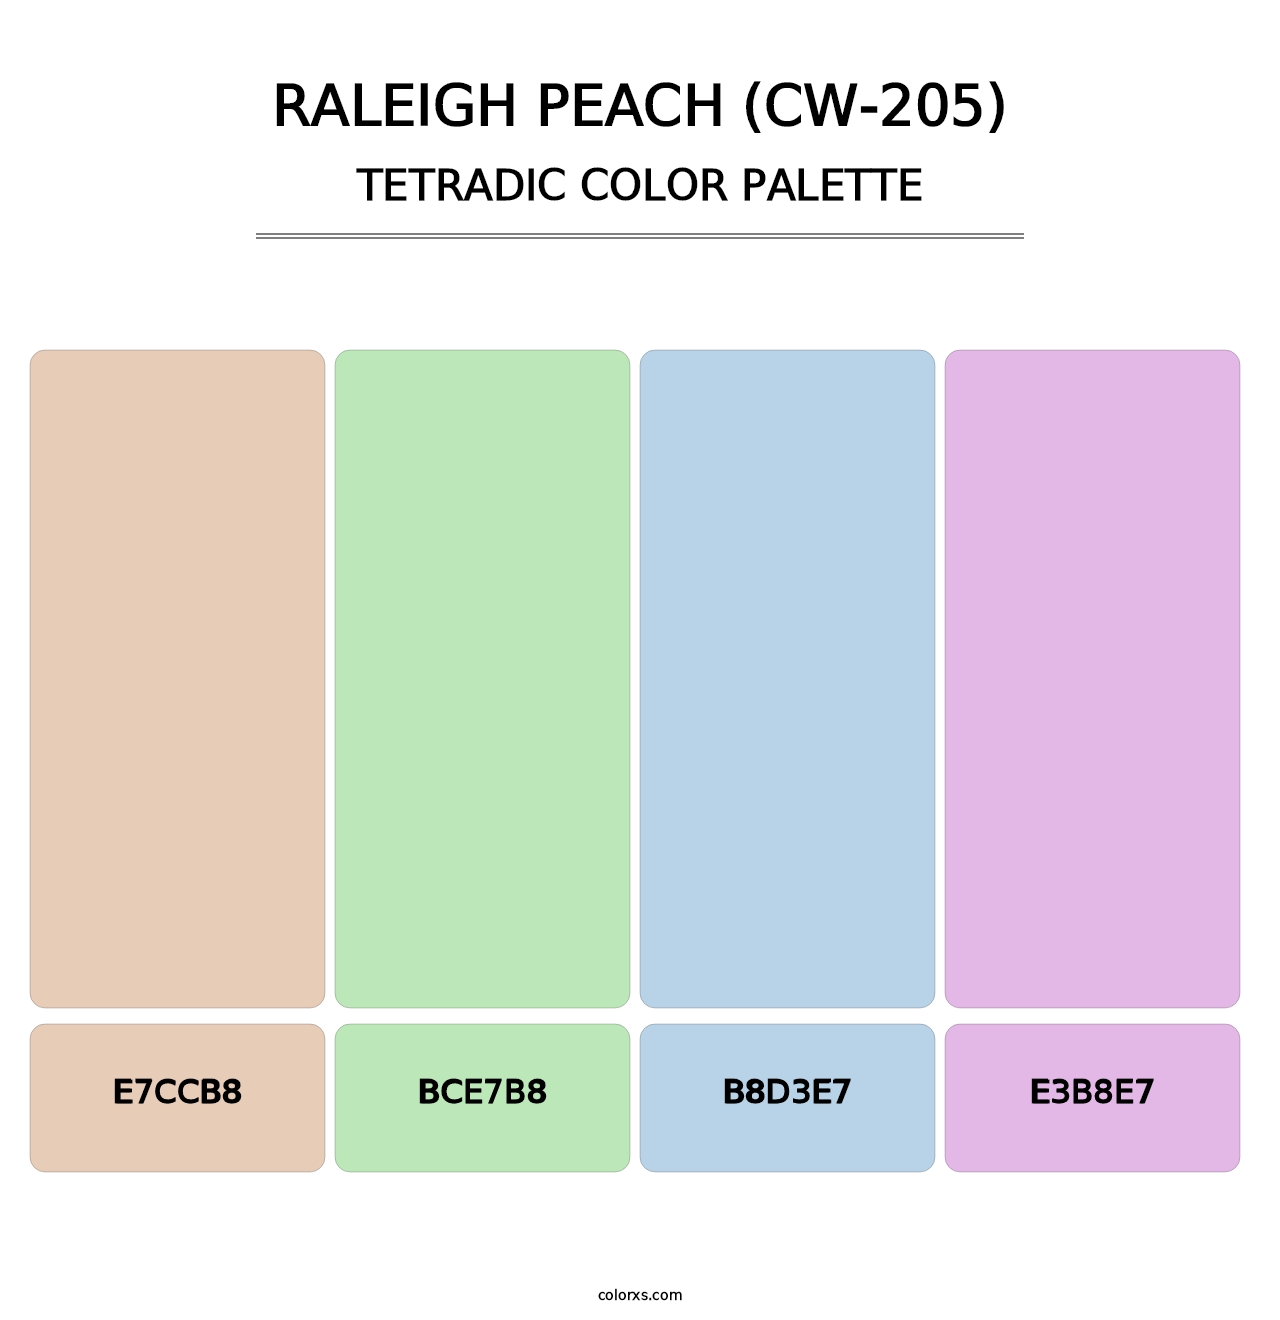 Raleigh Peach (CW-205) - Tetradic Color Palette